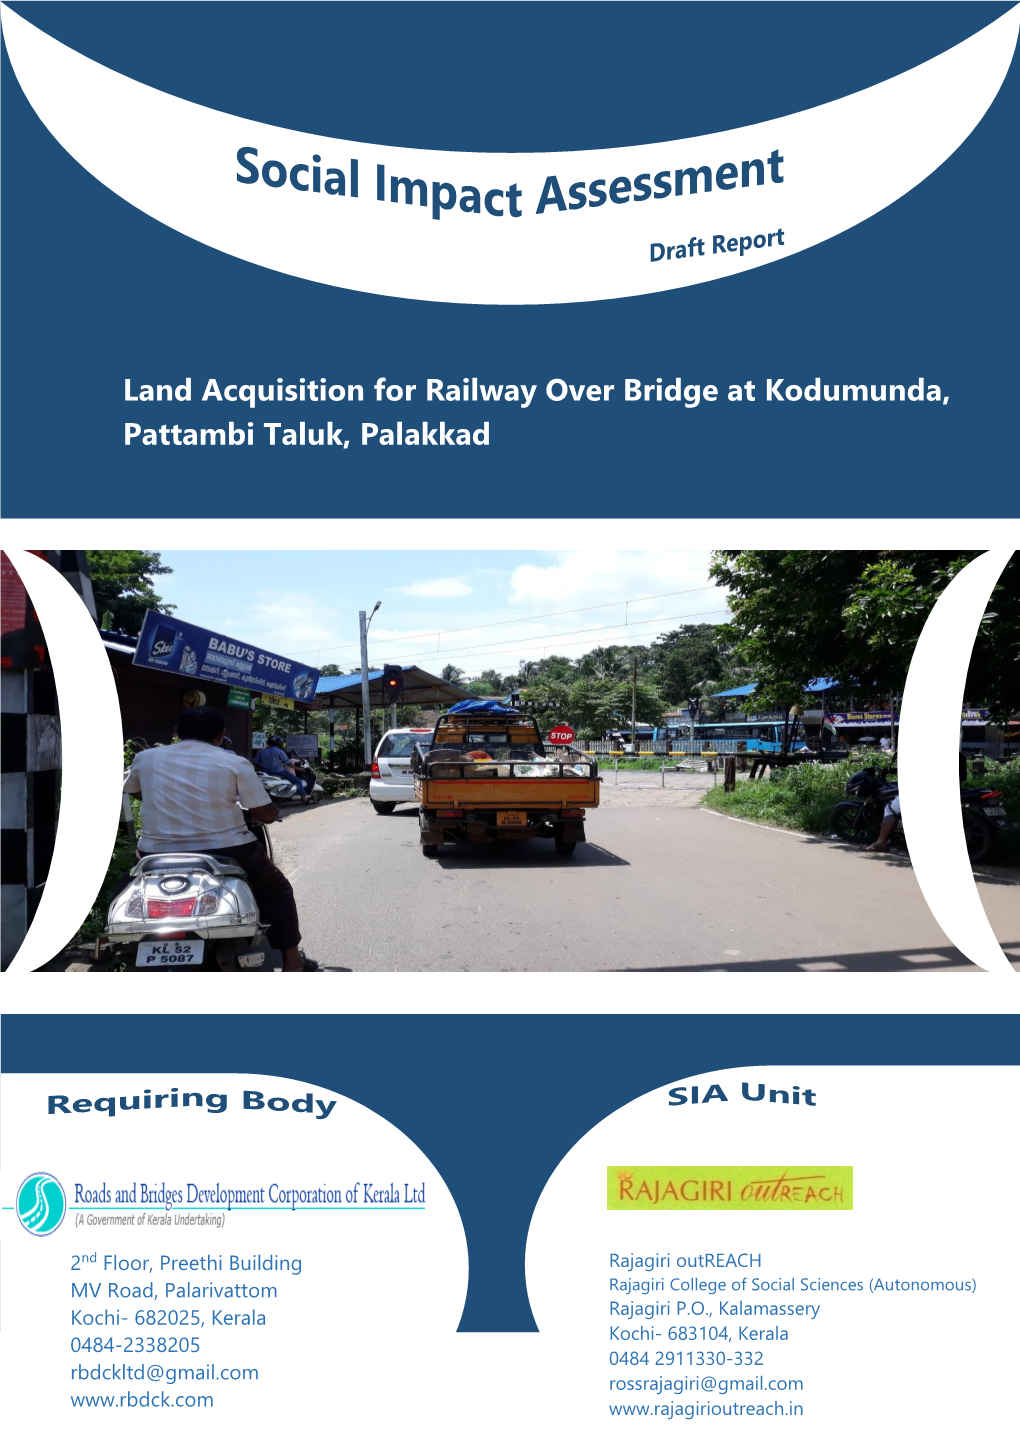 Land Acquisition for Railway Over Bridge at Kodumunda, Pattambi Taluk, Palakkad